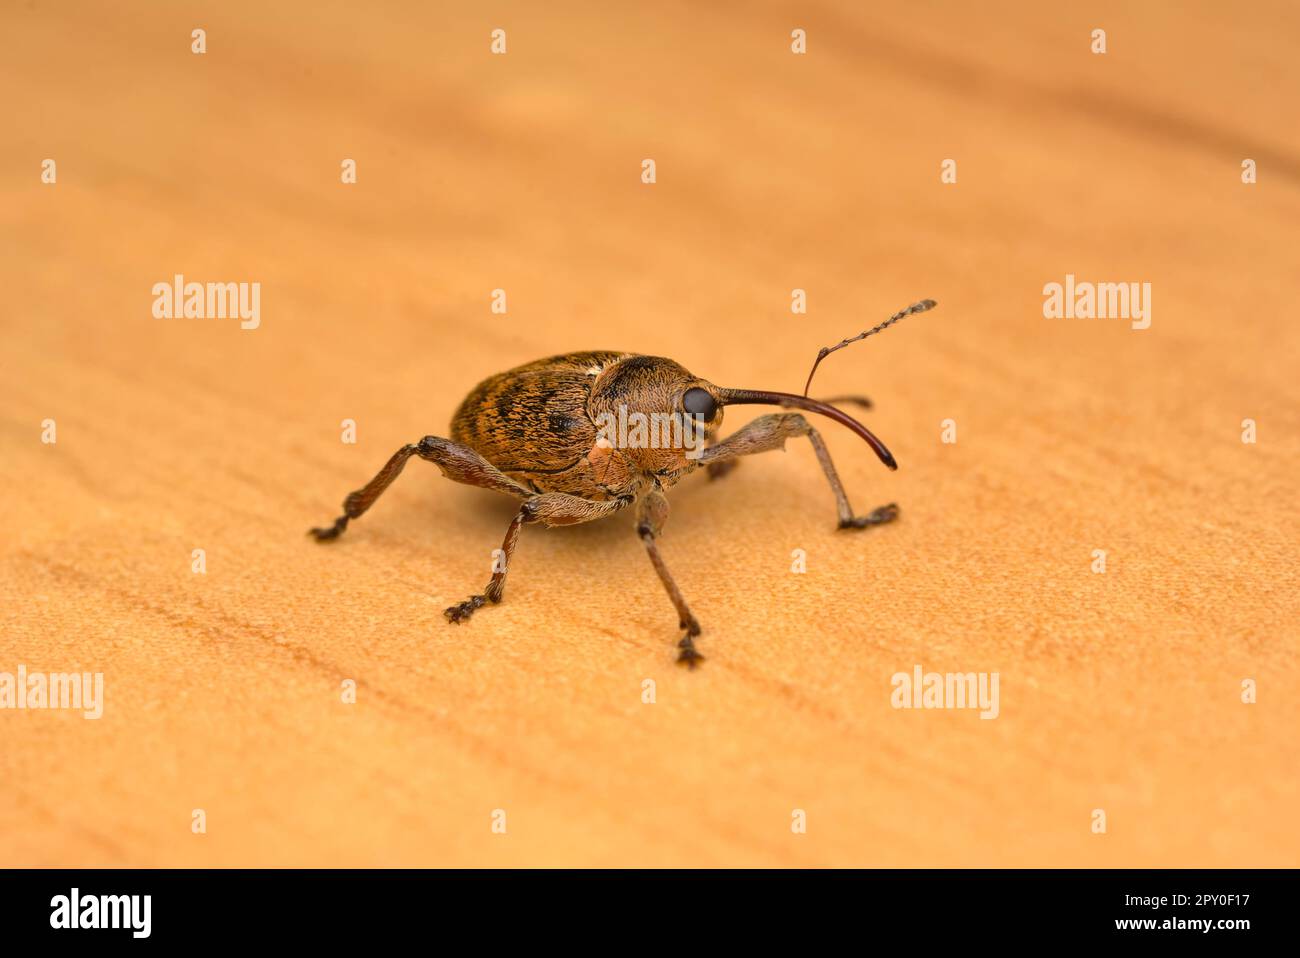 Single Weevil (Curculio glandium) on wooden ground, insect photography macro, nature, biodiversity Stock Photo